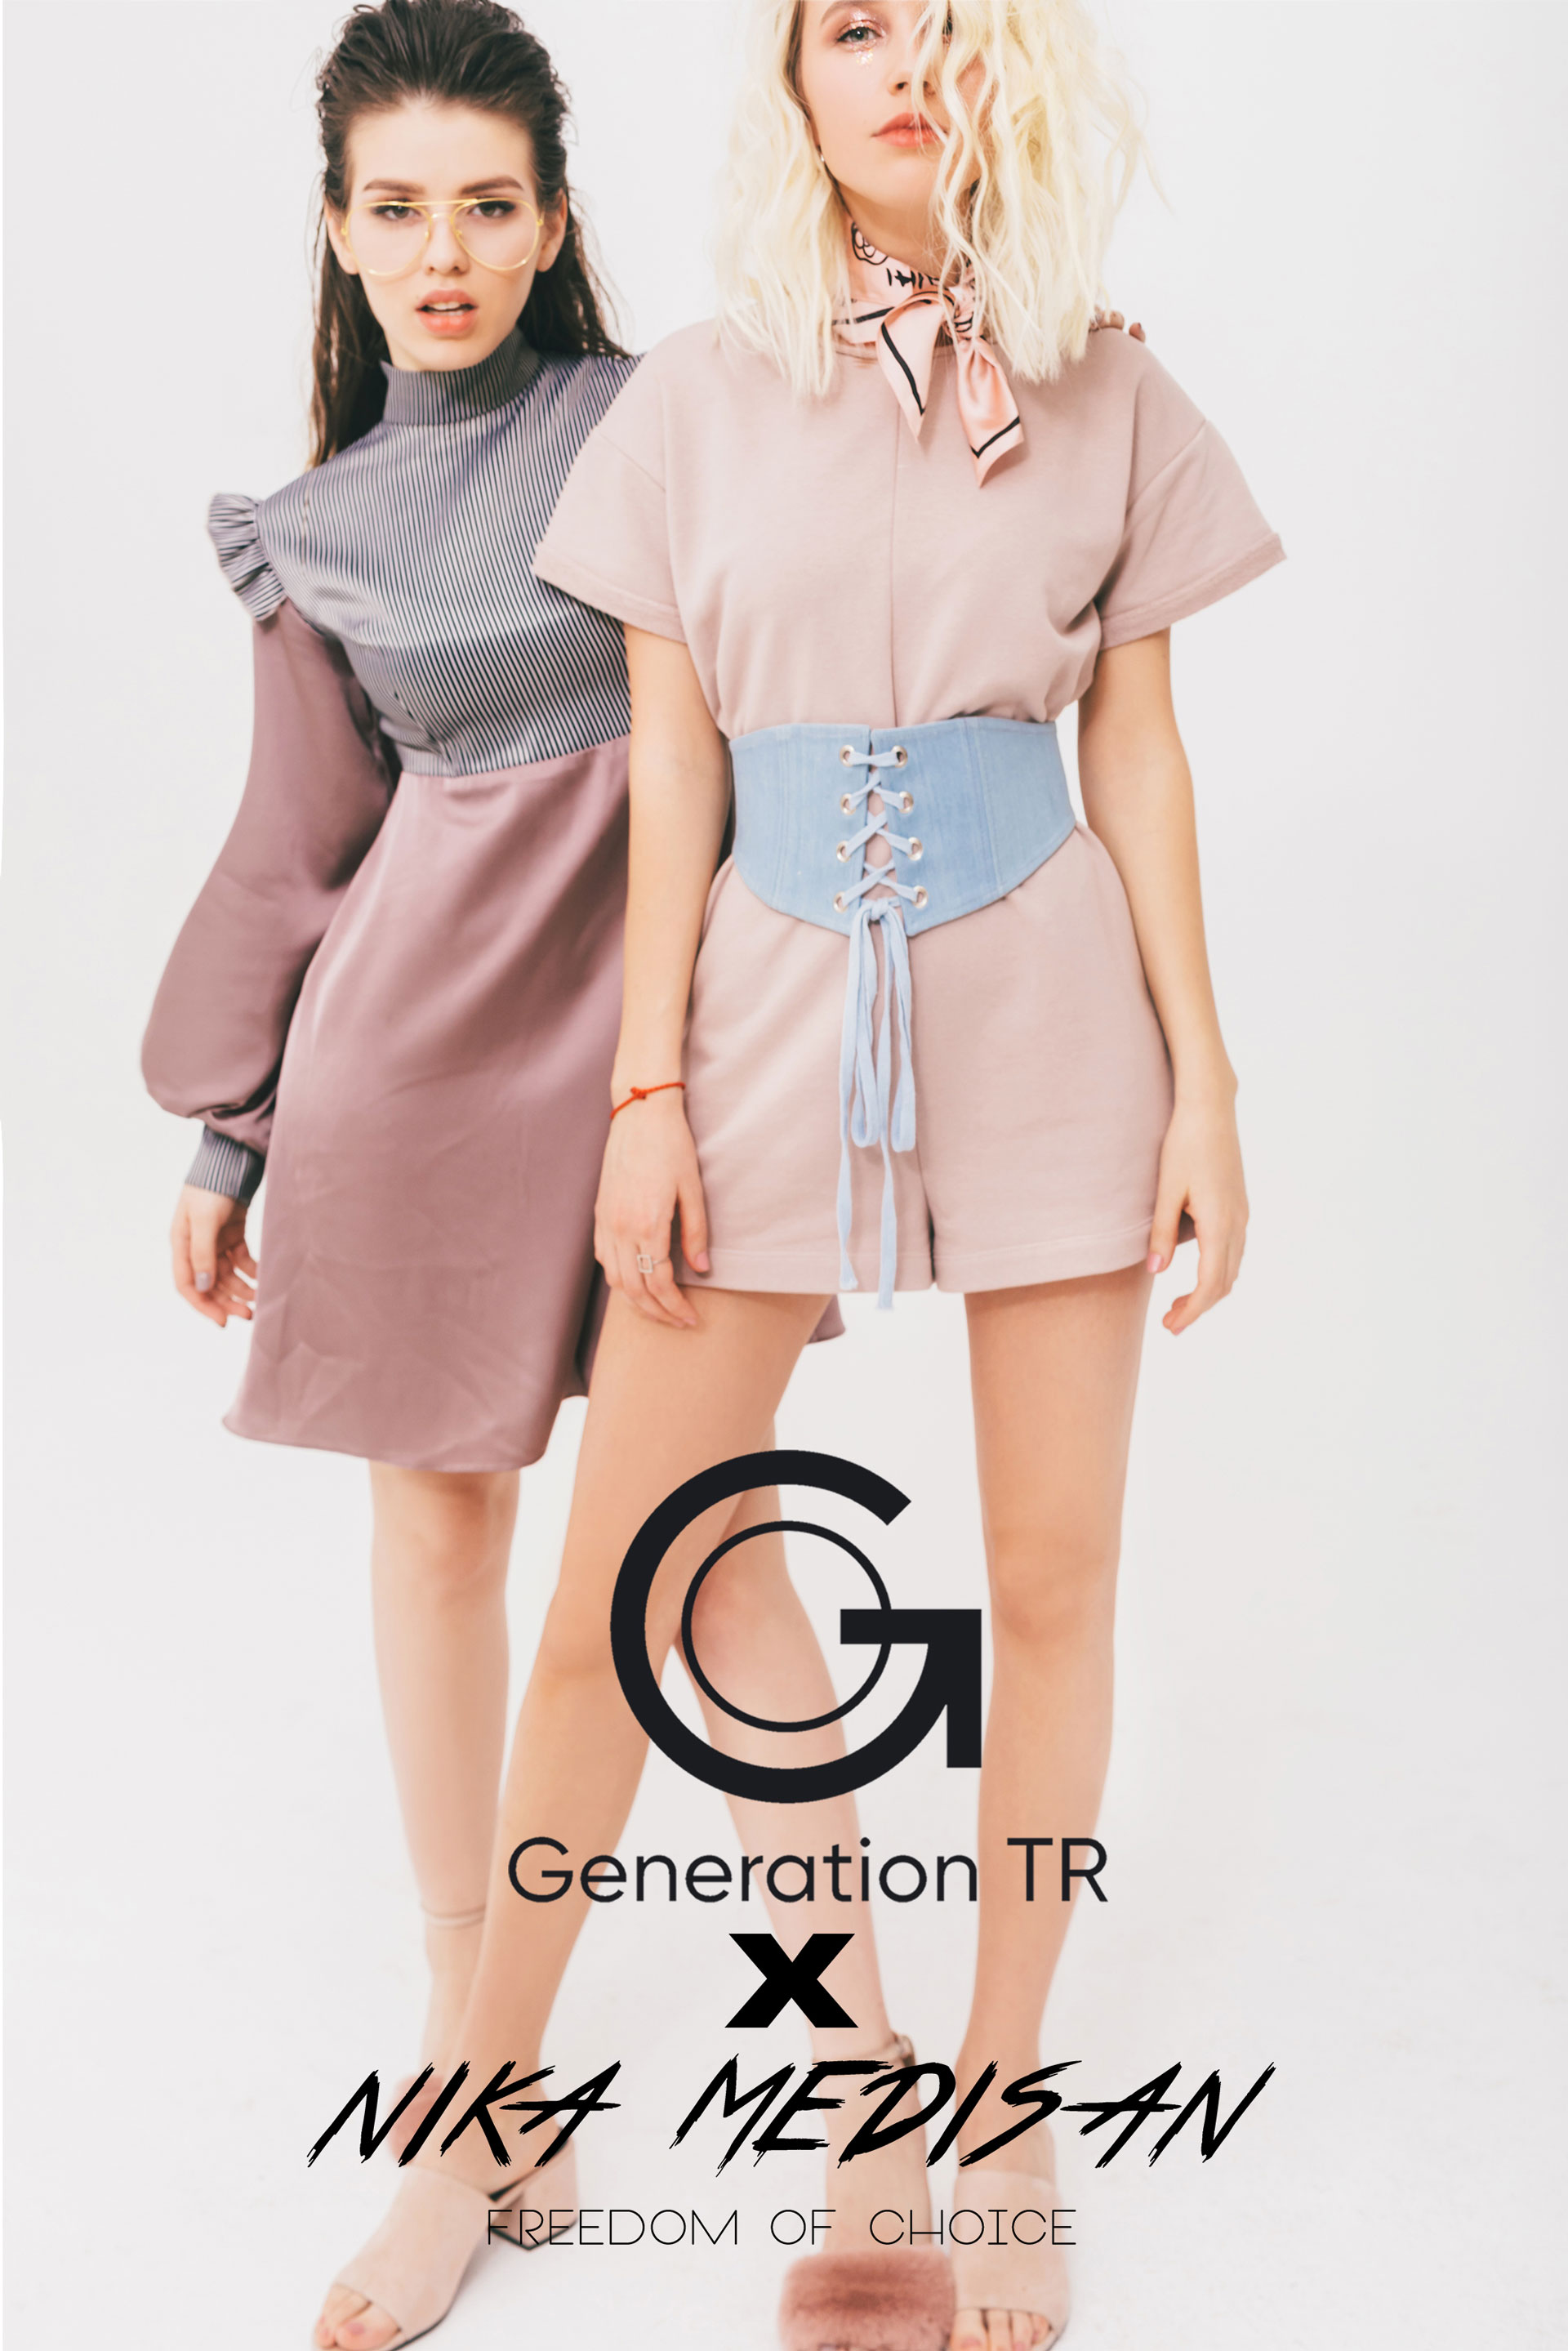 Generation TR